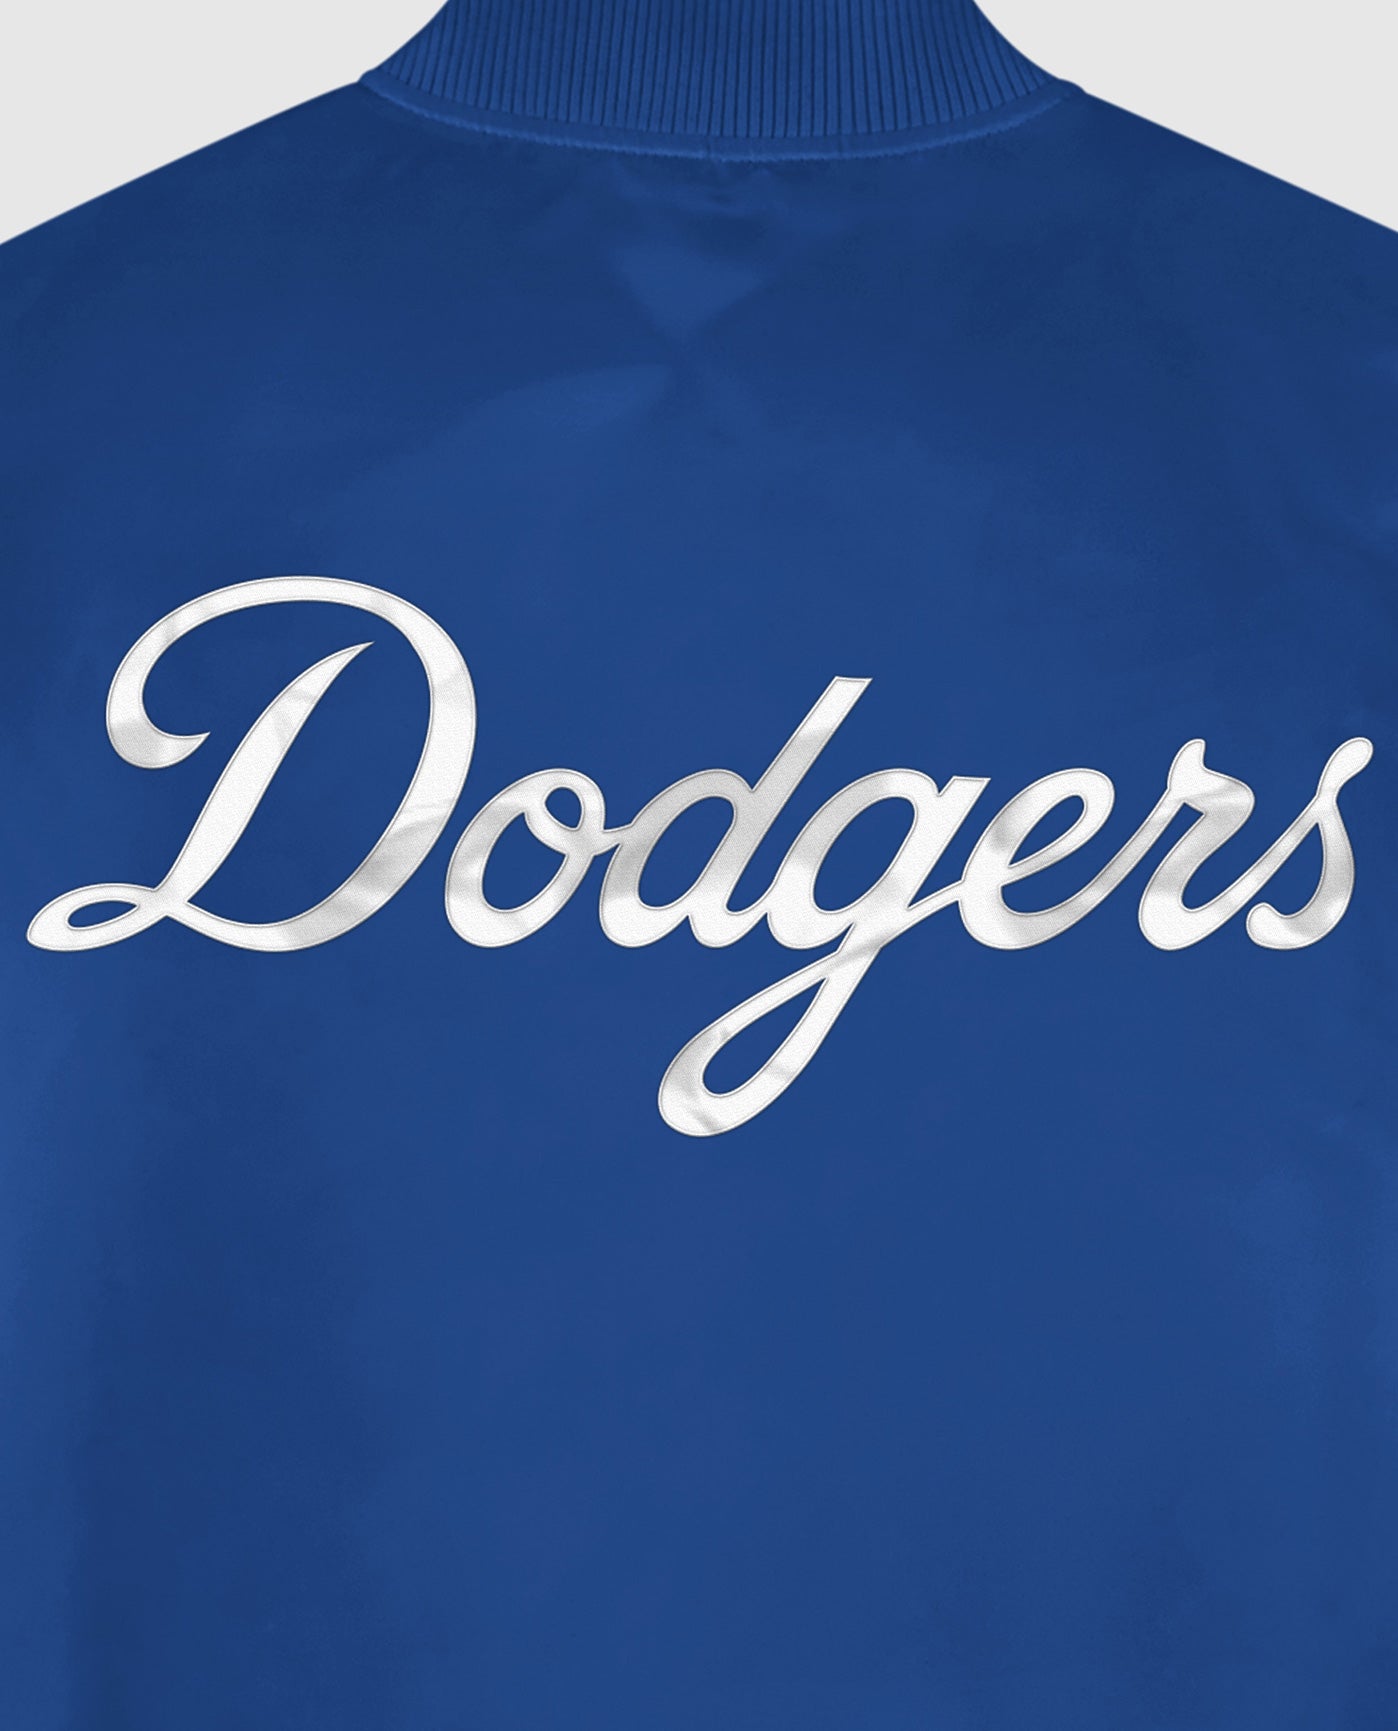 Los Angeles Dodgers Team Name Twill Applique | Dodgers Blue